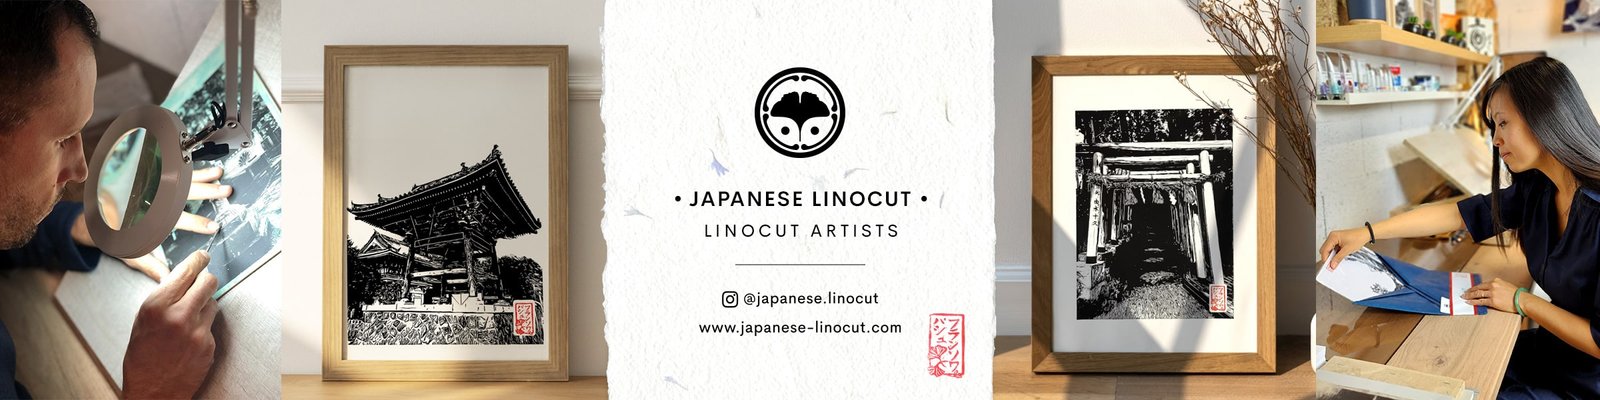 Japanese linocut artists